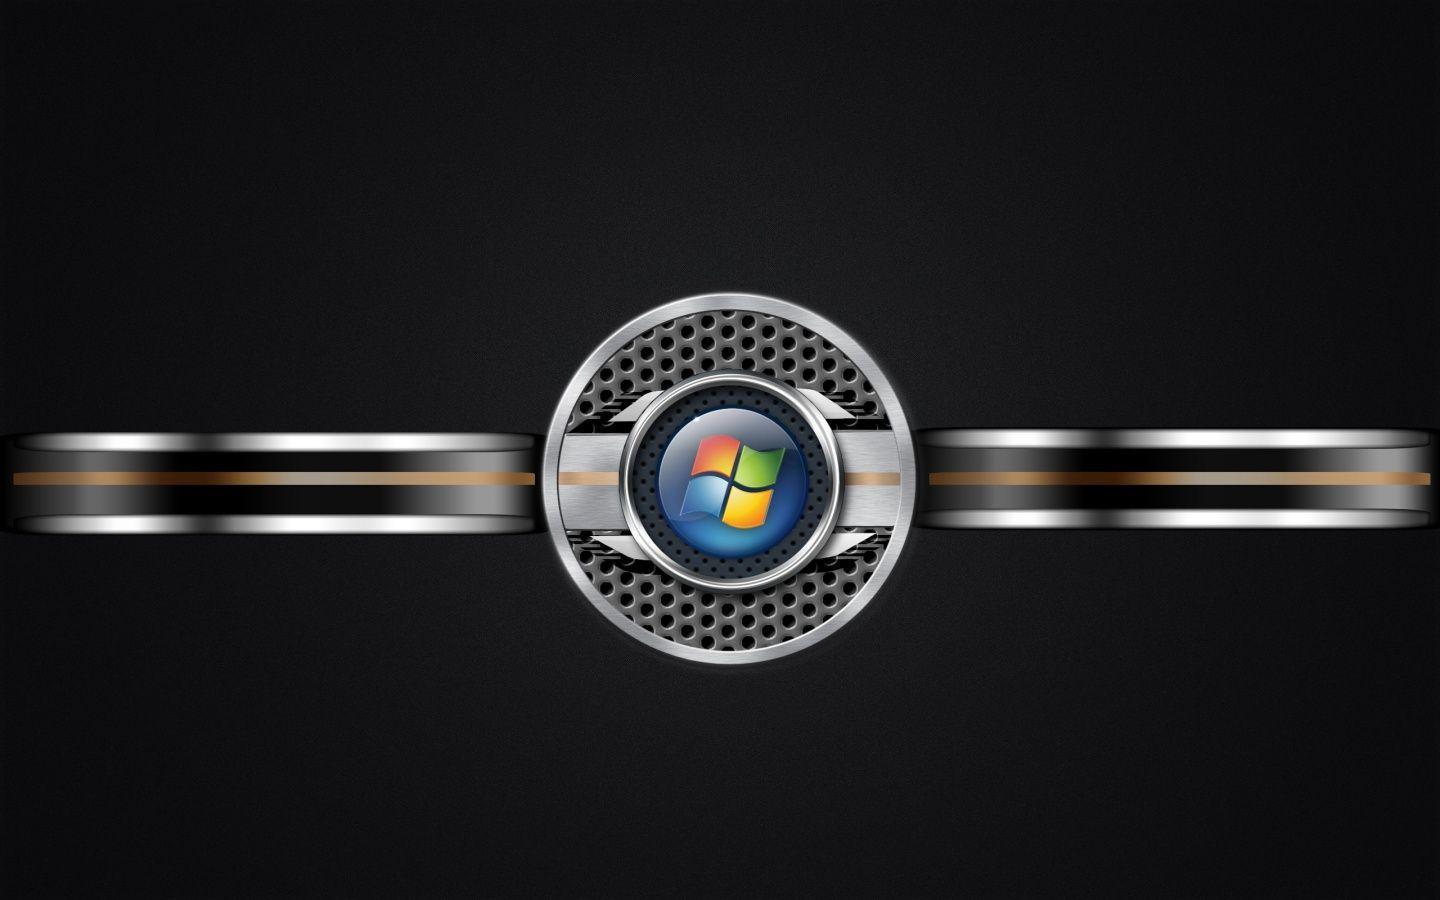 Chrome Windows 8 Wallpaper. Microsoft Windows 8 Chrome Background